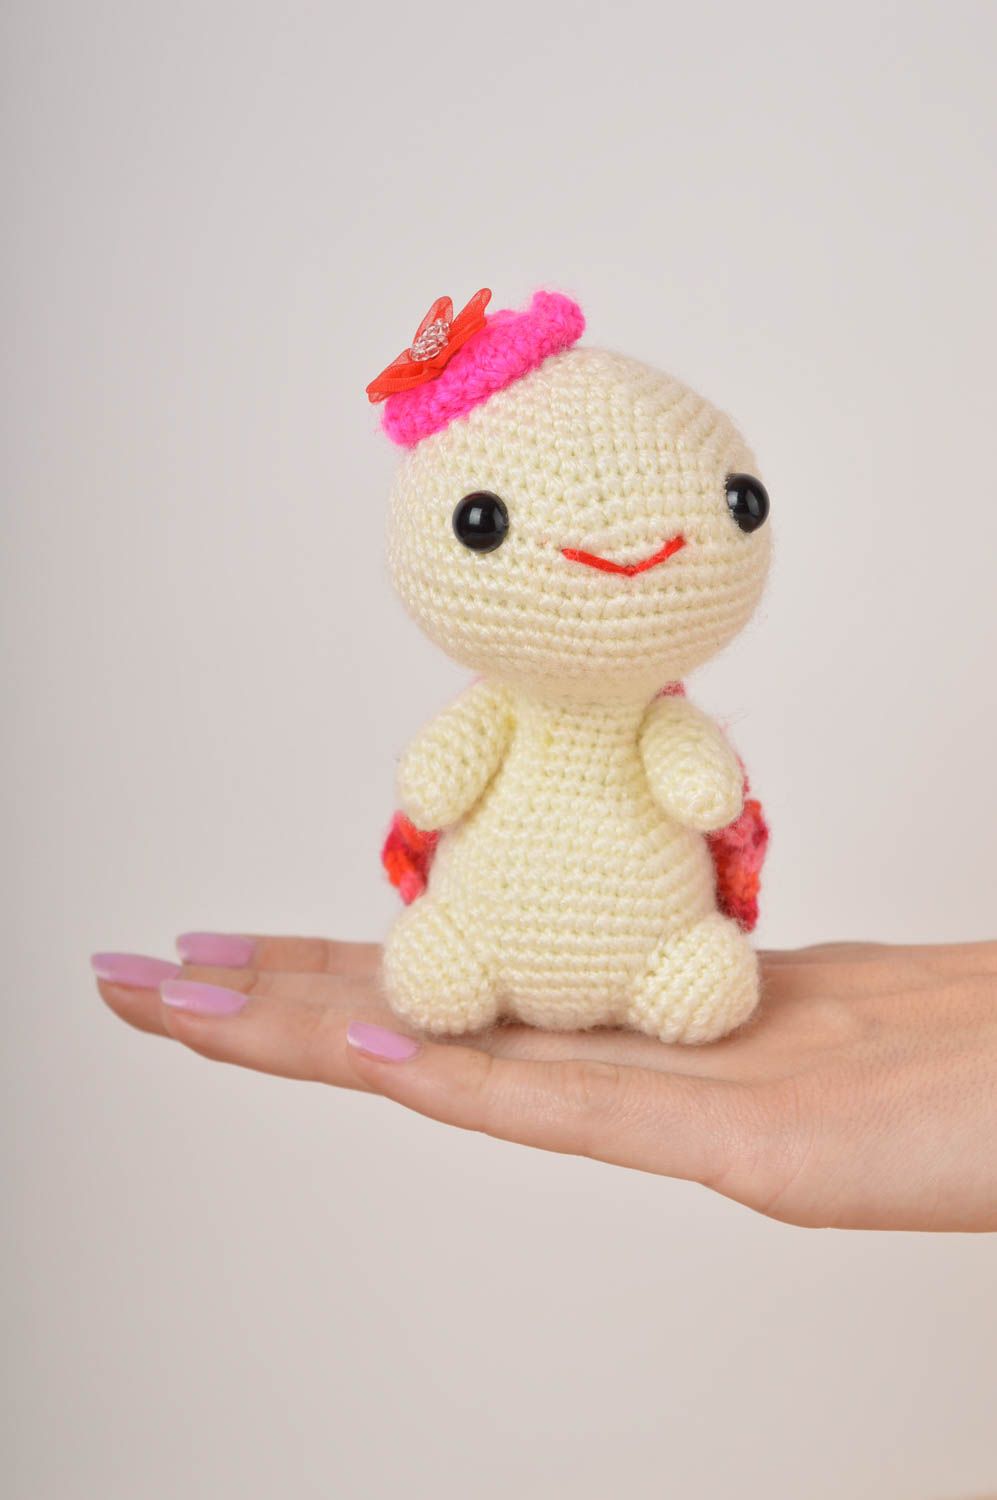 Designer beautiful toy handmade crocheted toy for babied nursery decor photo 5